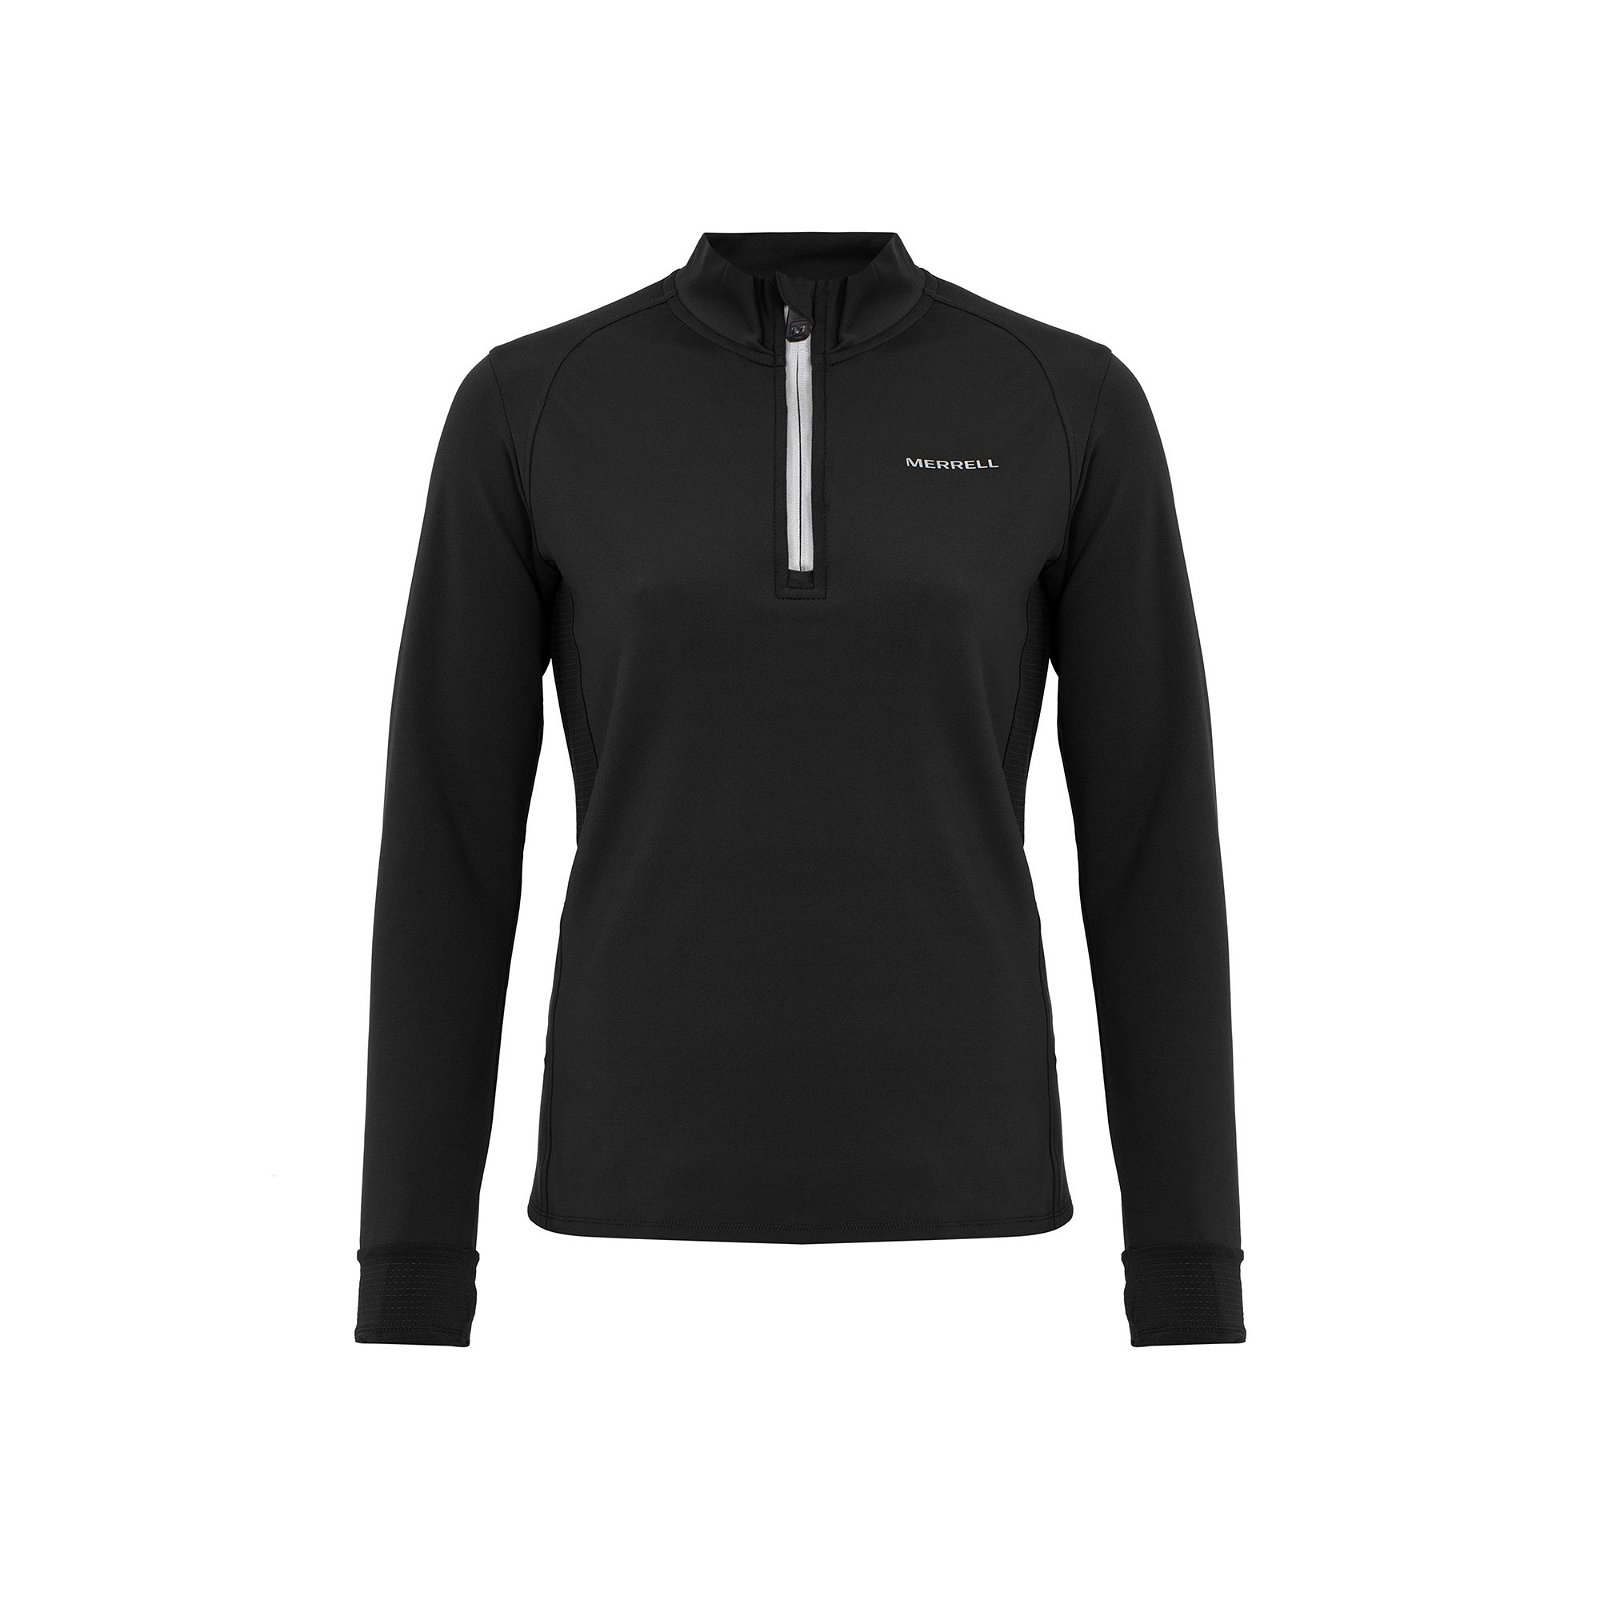 Merrell Select Kadın Sweatshirt - Siyah - 1